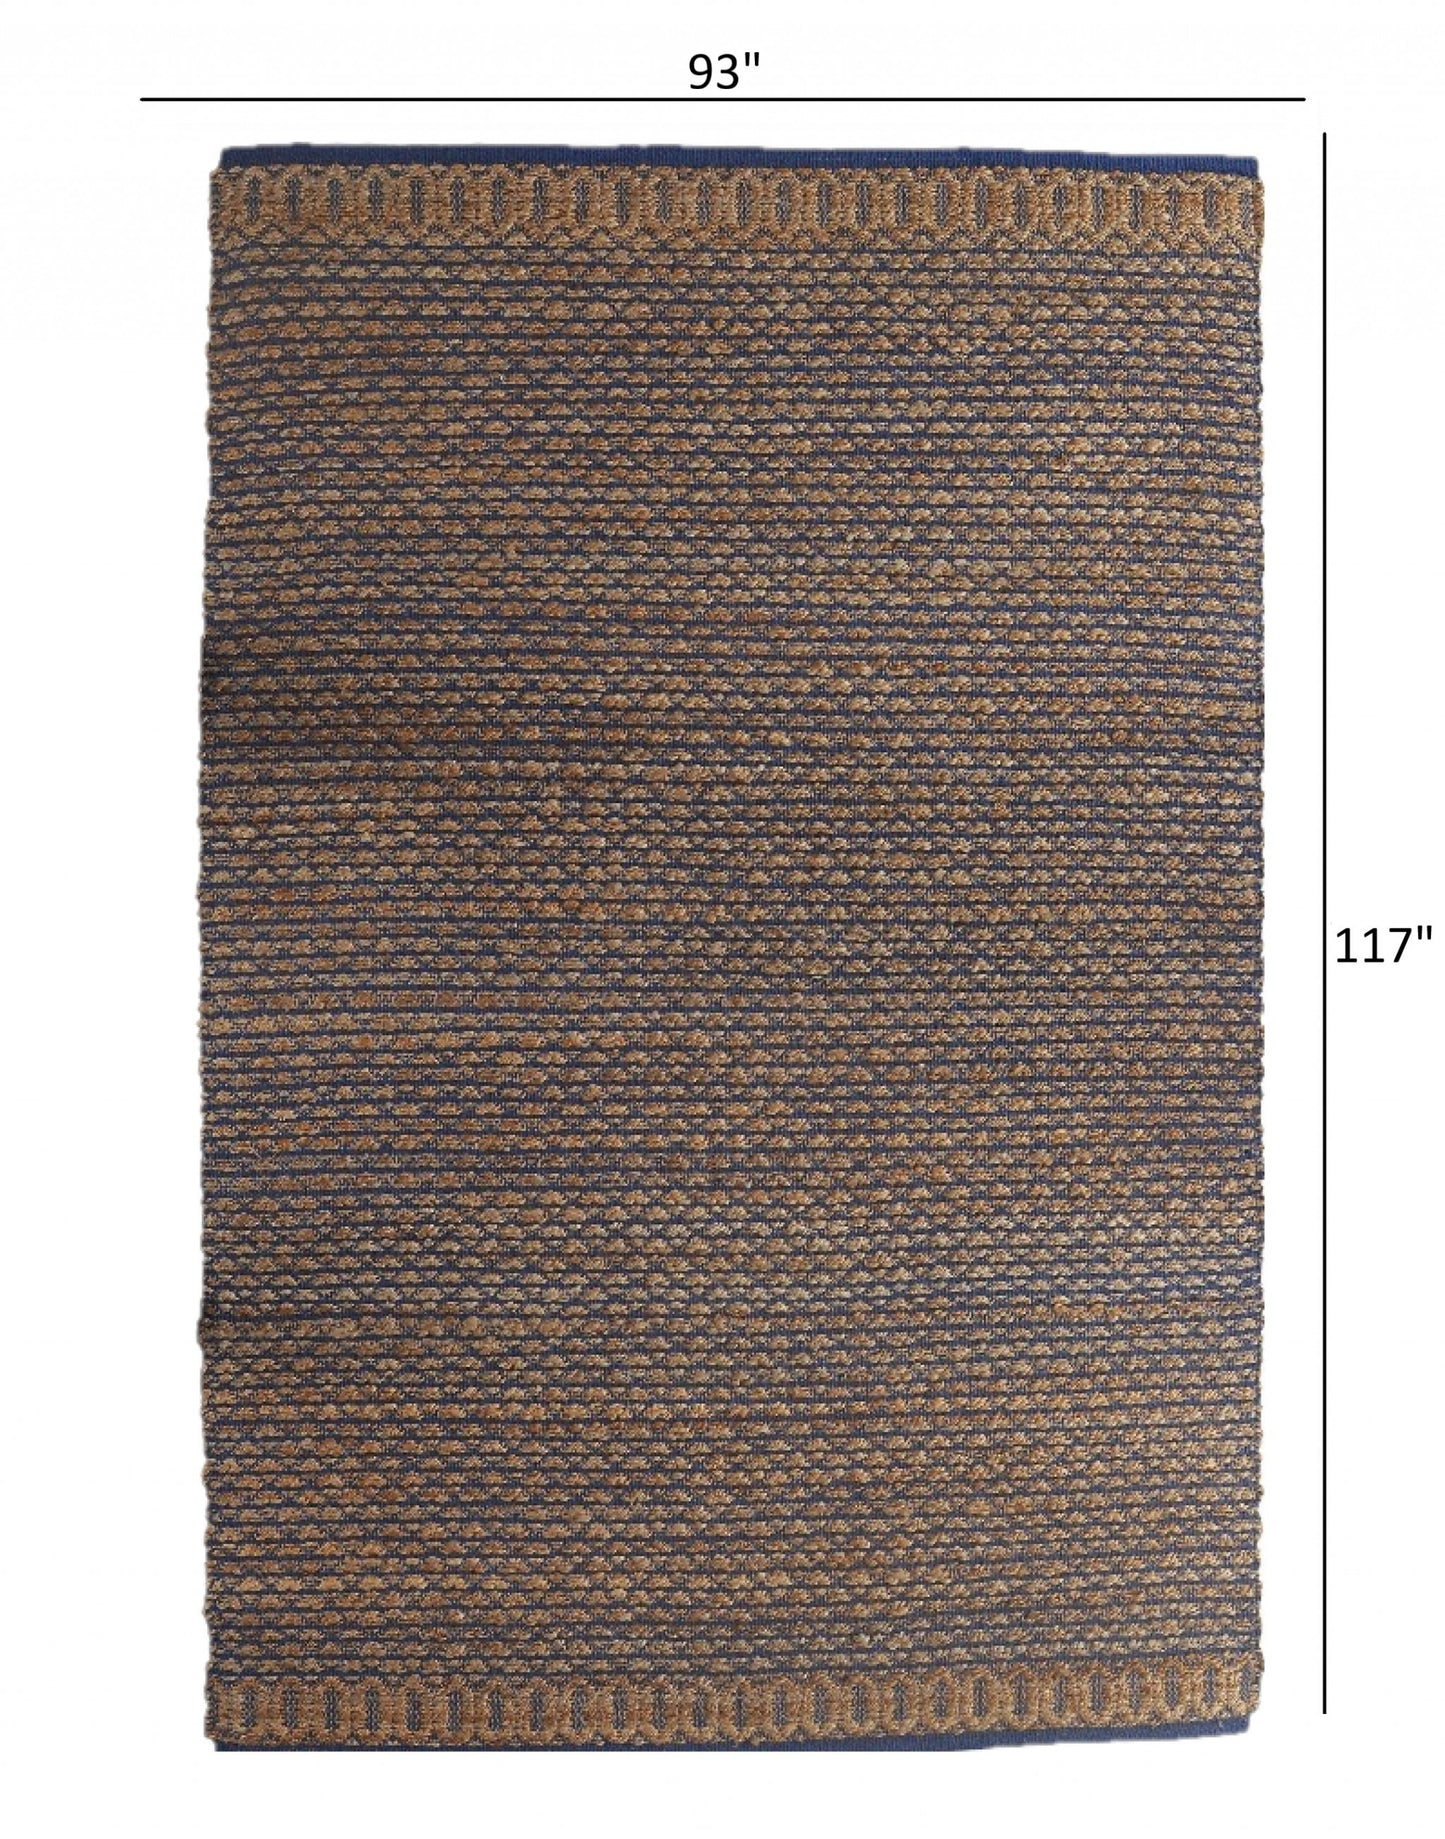 5’ x 8’ Tan and Blue Detailed Lattice Area Rug